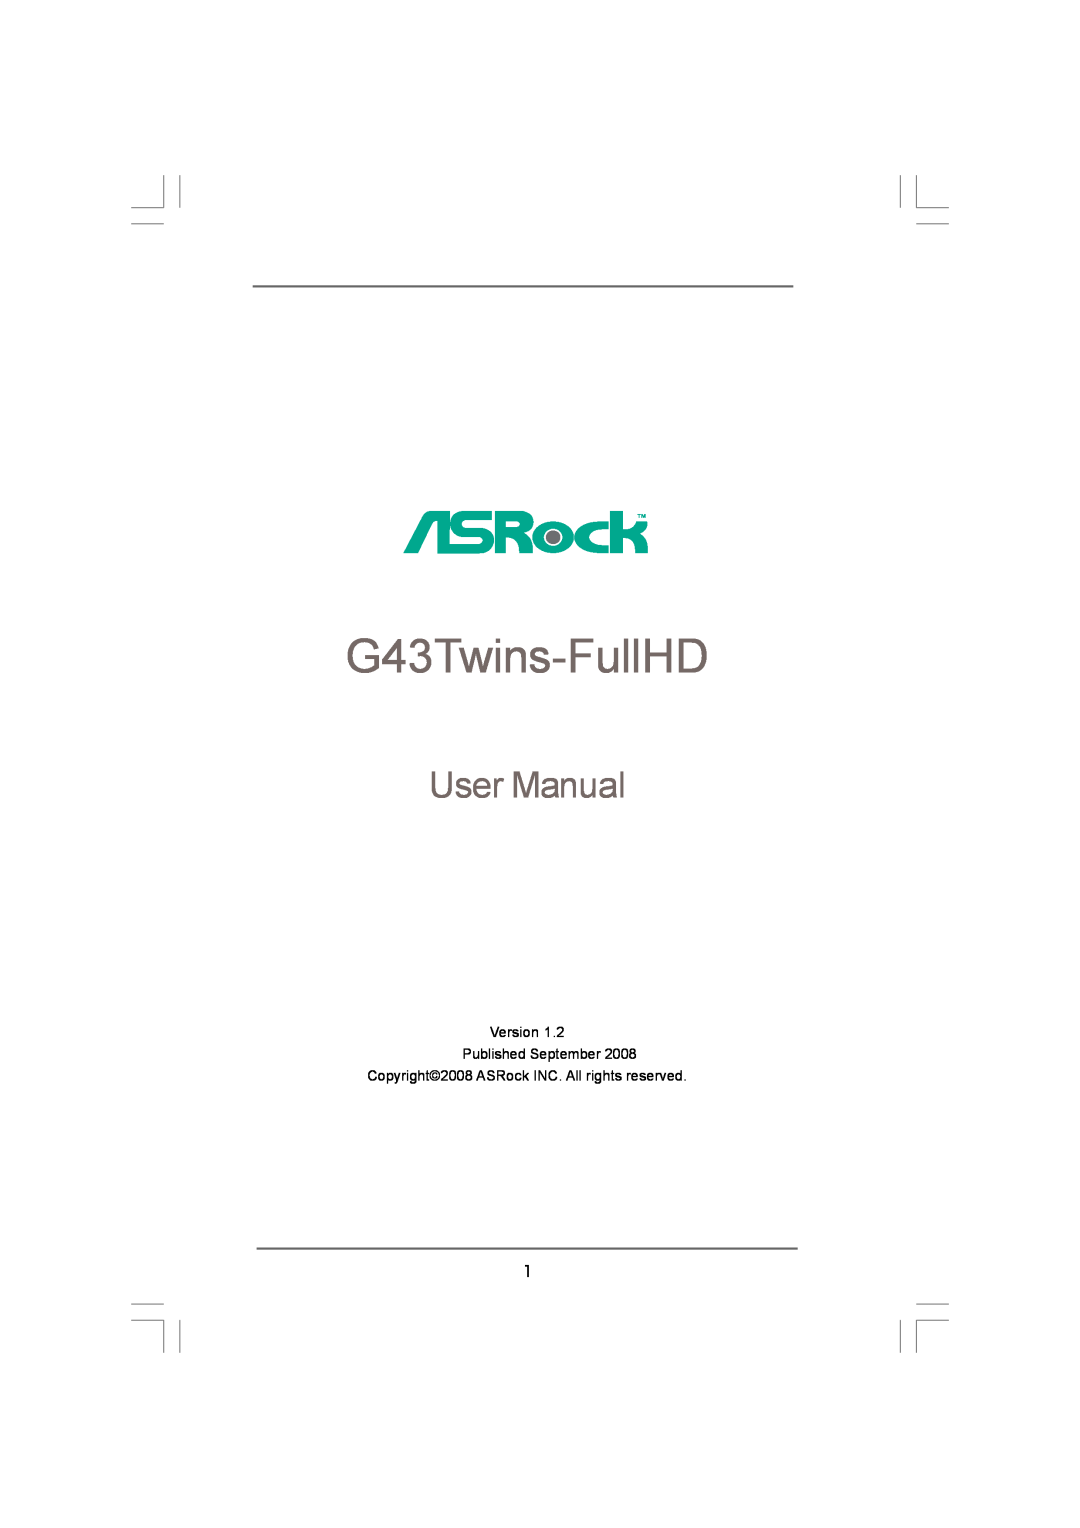 Magnavox G43TWINS-FULLHD user manual G43Twins-FullHD, User Manual 